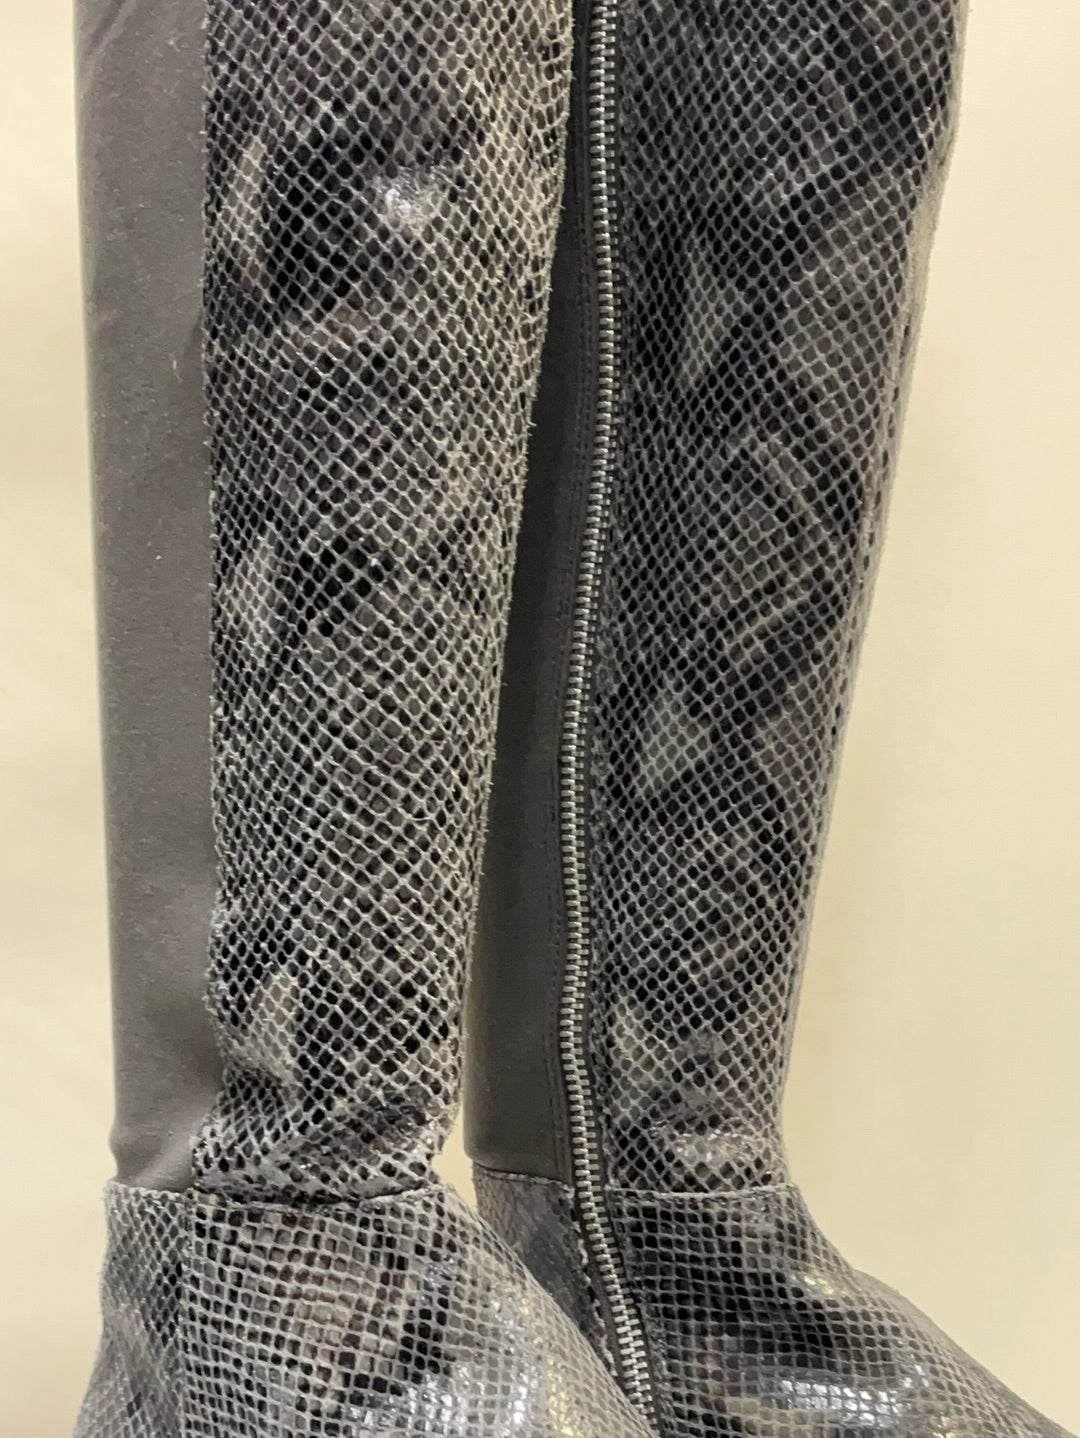 Michael Kors snakeskin pattern boots